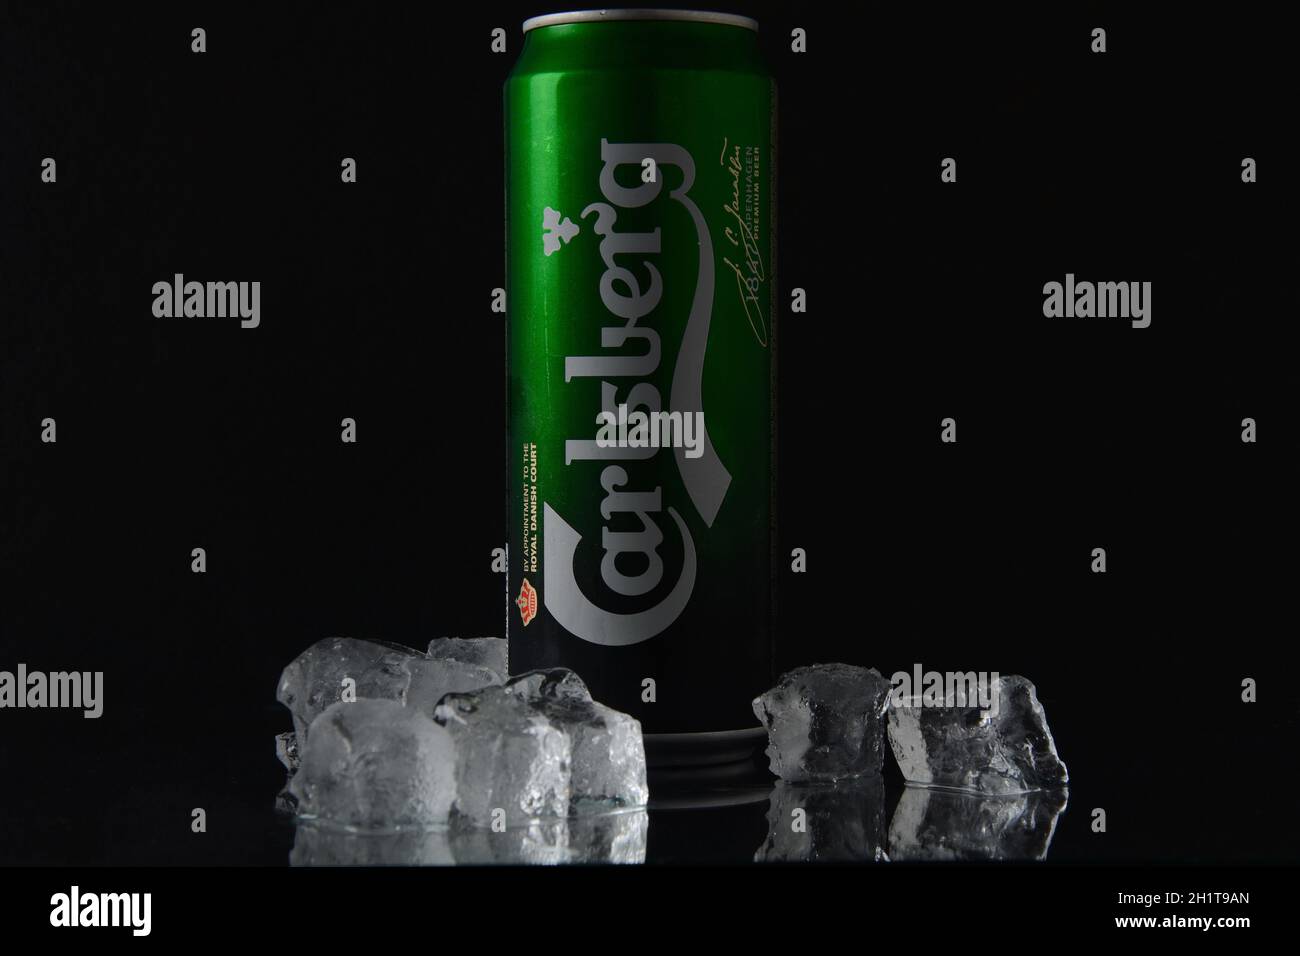 NETANYA,ISRAEL- June 29, 2020: Aluminum can of Carlsberg beer black background. Danish brewing company founded in 1847. Stock Photo